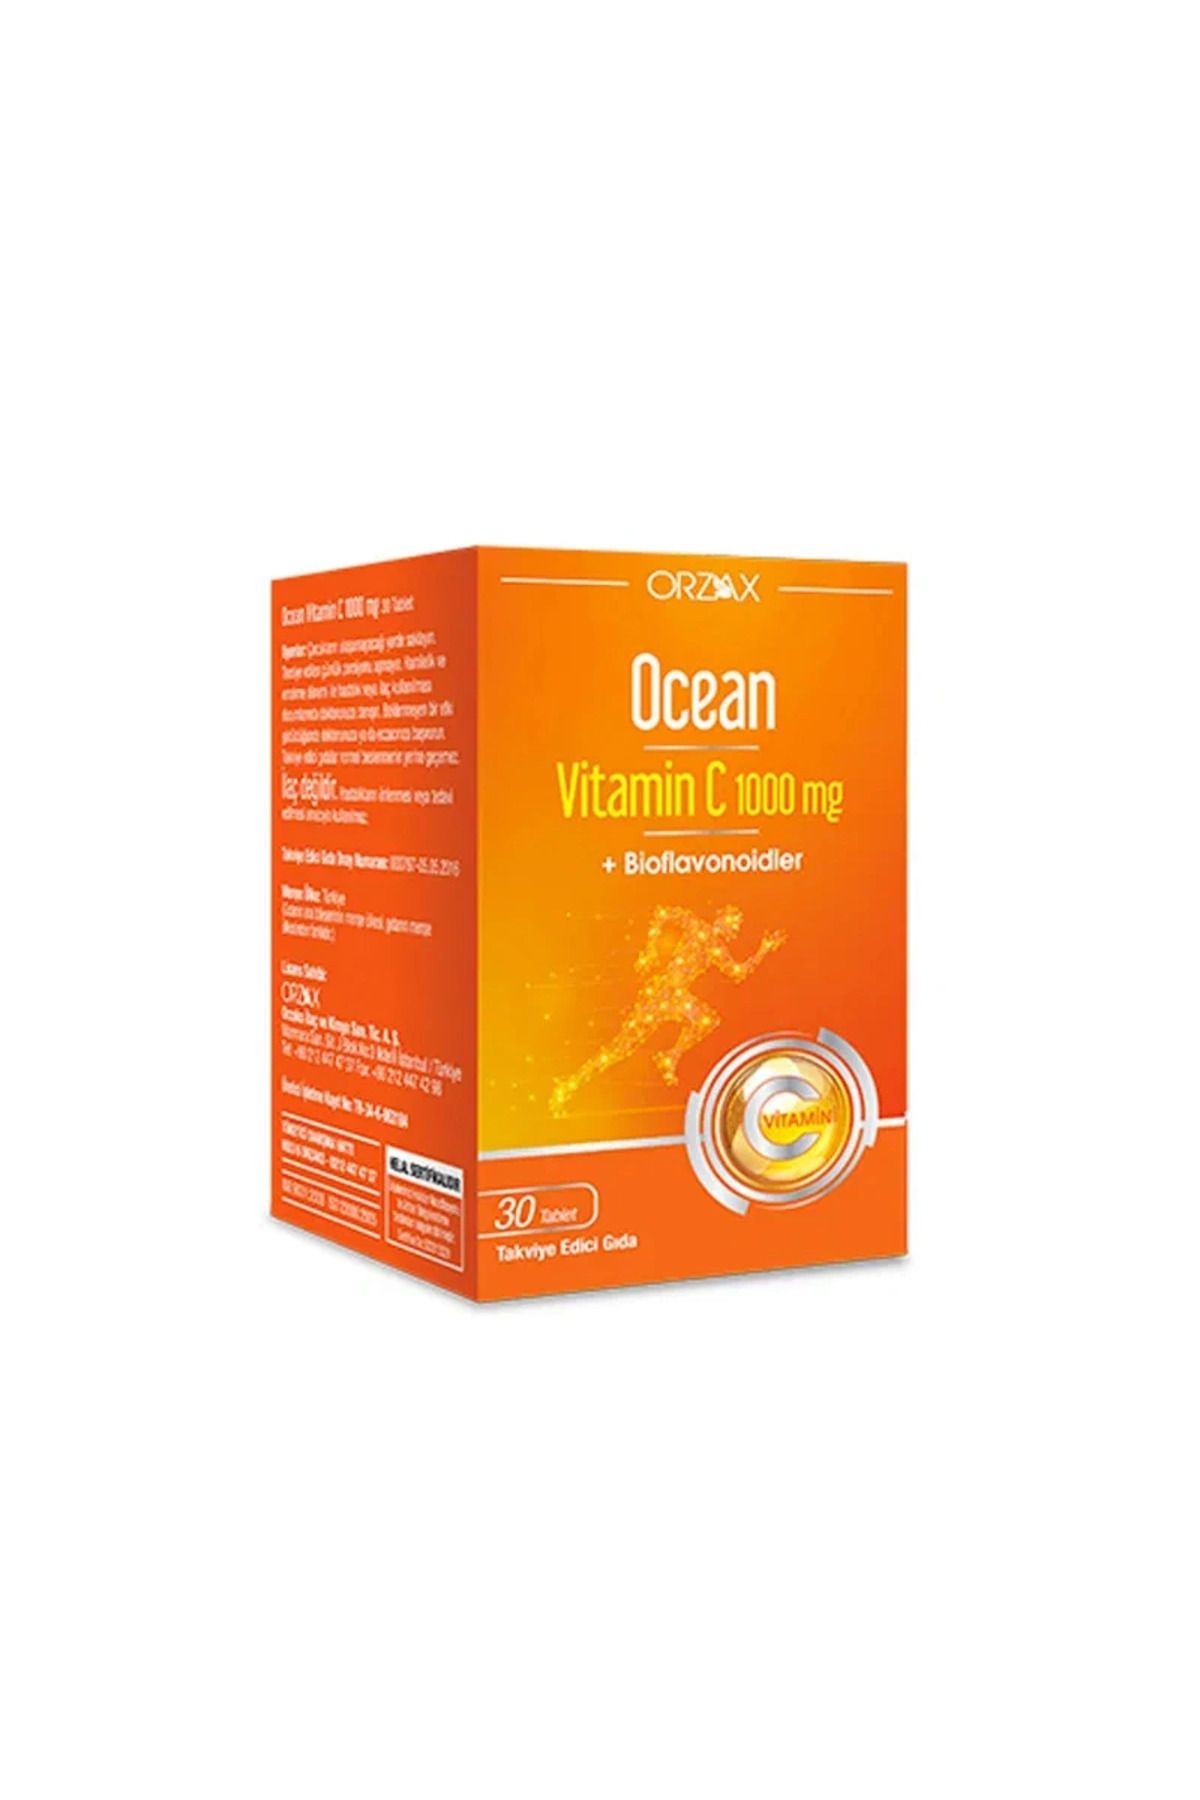 Ocean Orzax Orzax Ocean Vitamin C 30 Tablet